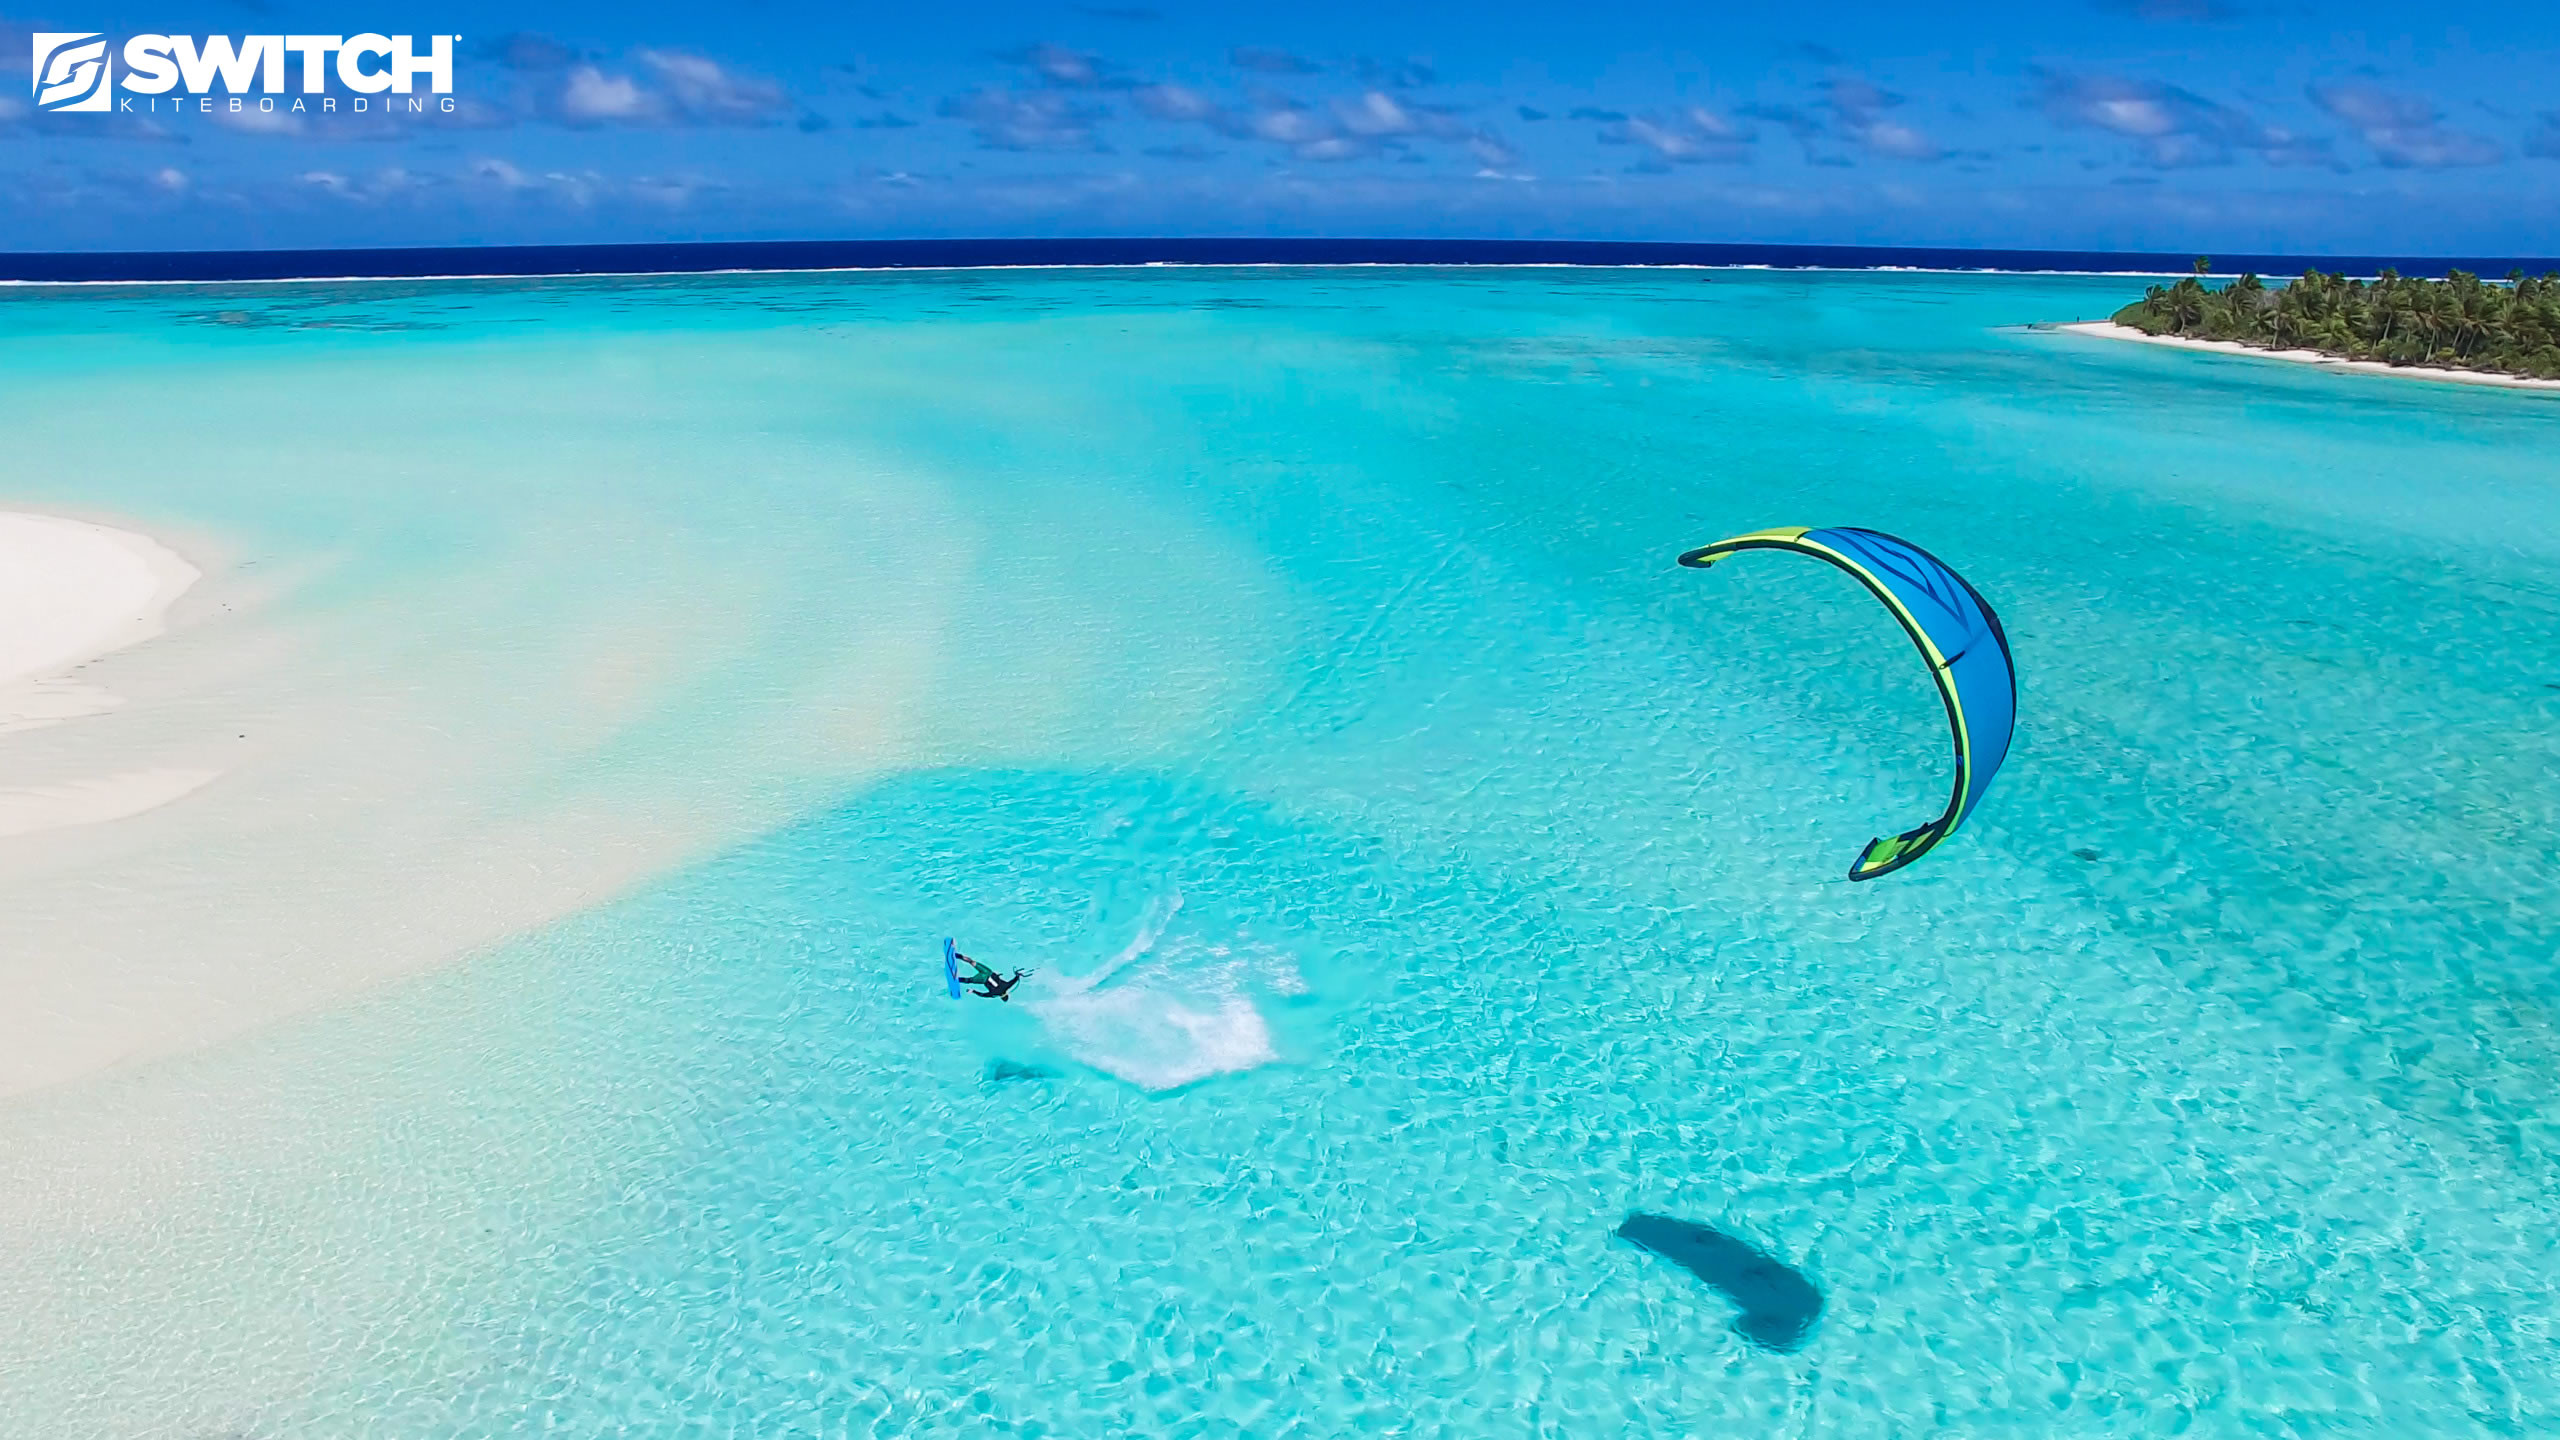 2560x1440 Kitesurfing Wallpaper - Switch Kiteboarding. Rider: Greta Menardo, Location  Aitutaki, Cook Is